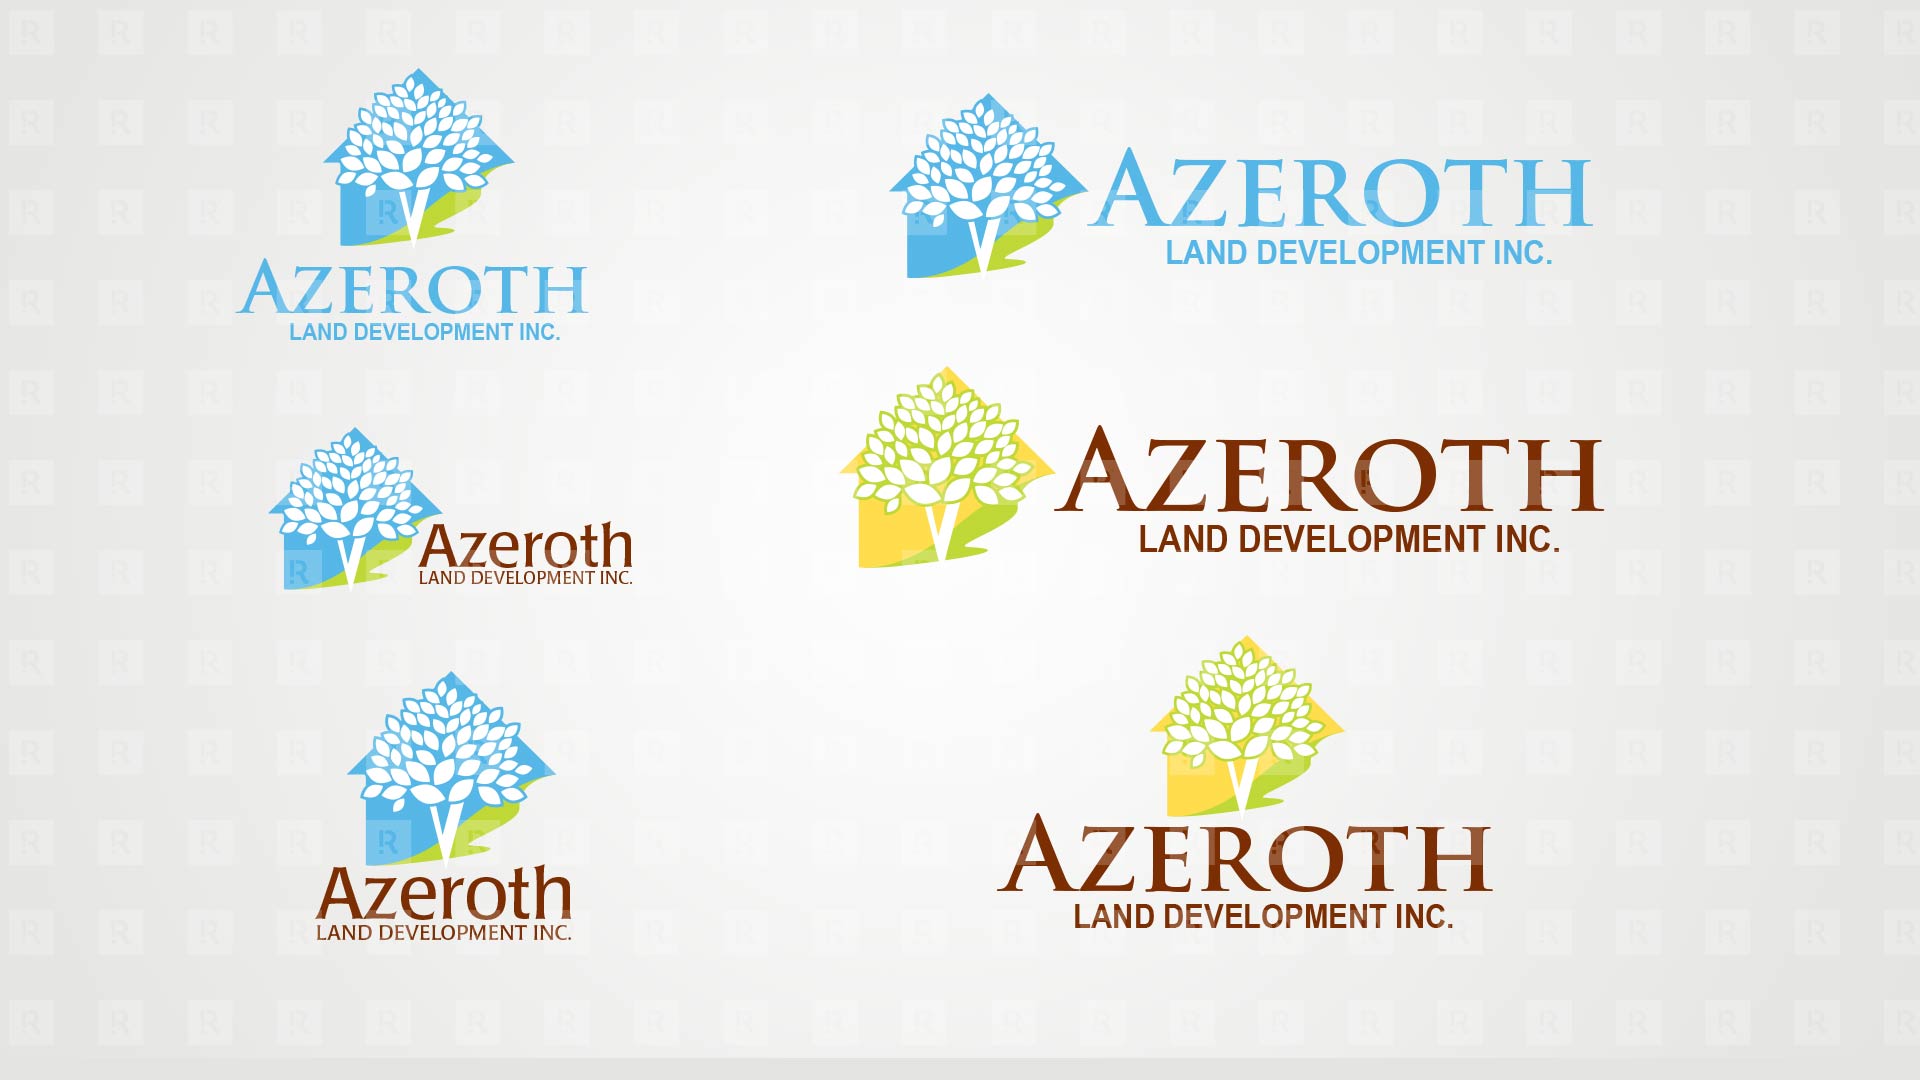 Azeroth Land Development Inc. Brand Identity studies